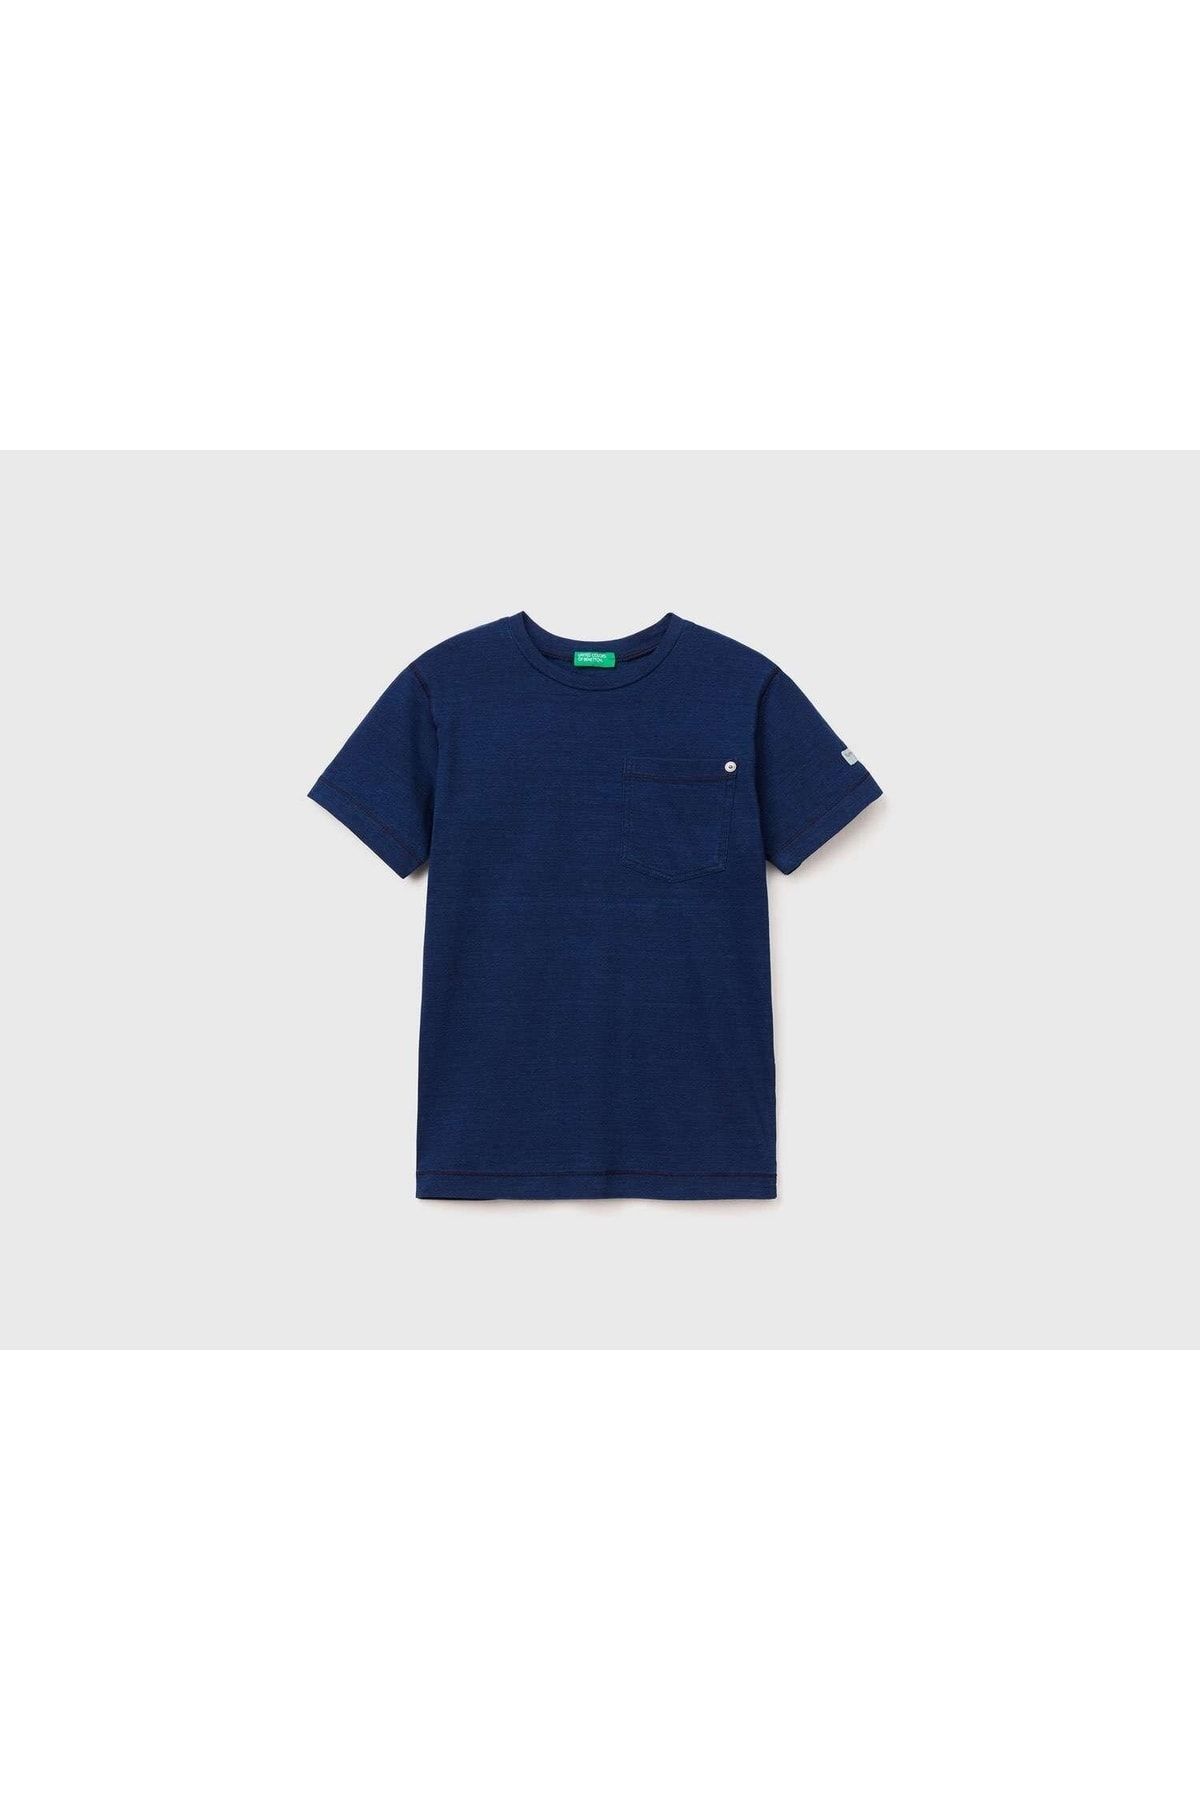 United Colors of Benetton Erkek Çocuk Mix Çizgili Cep Detaylı T-shirt